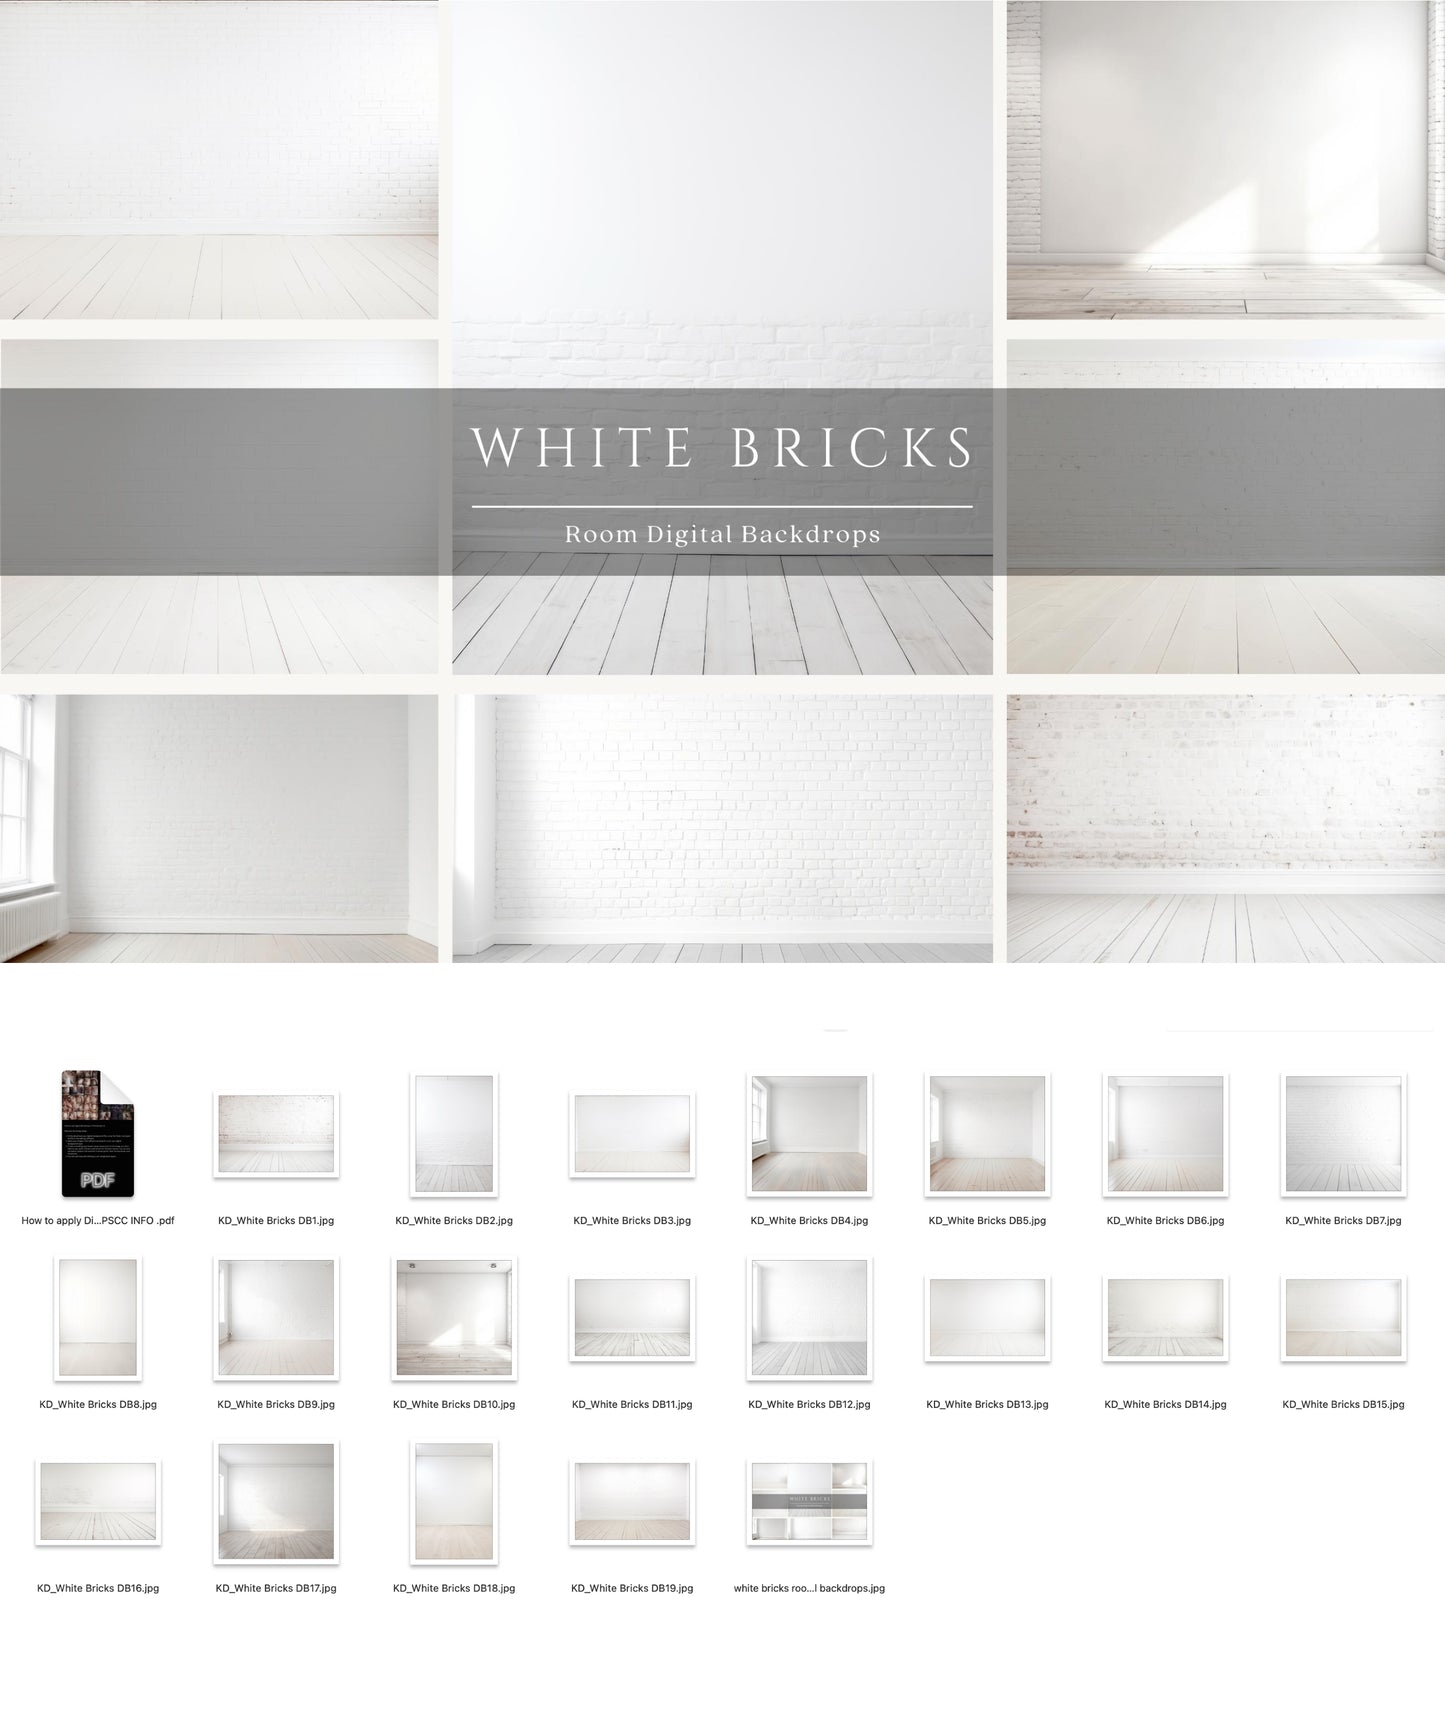 White Bricks Room Digital Backdrops